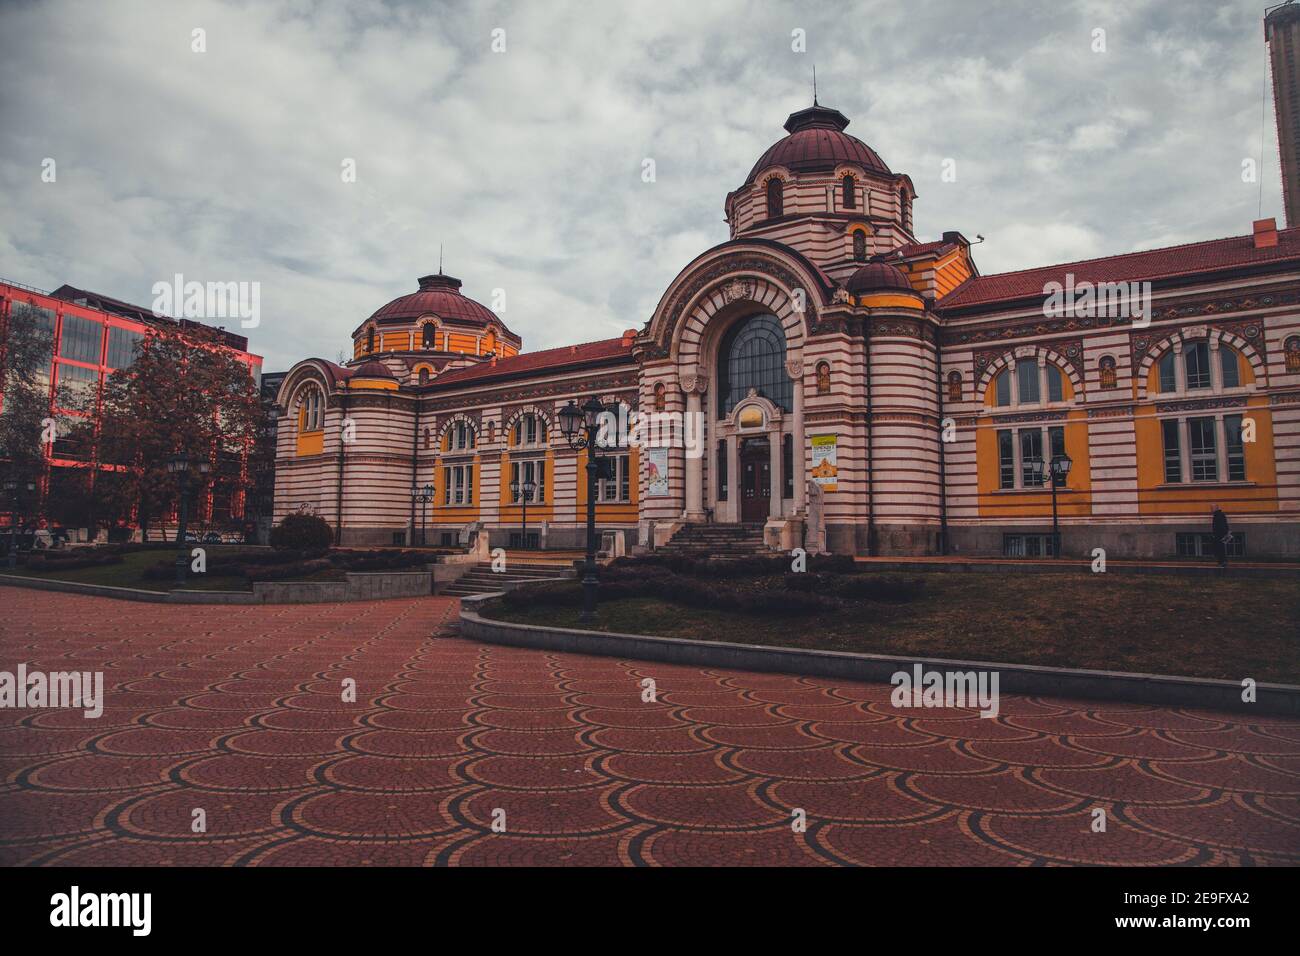 Sofia History Museum in the city of Sofia, Bulgaria Stock Photo